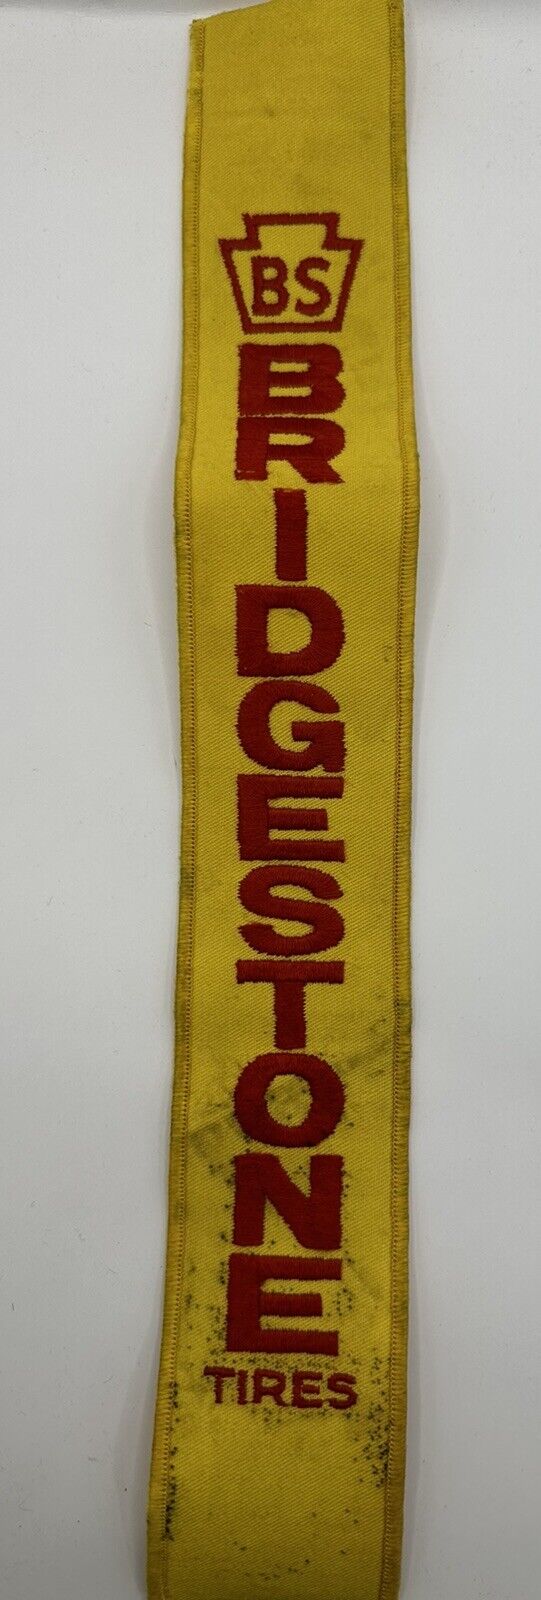 Bridgestone BS Iron On Patch Vintage Rare Yellow Vertical Large 14X2 Inches